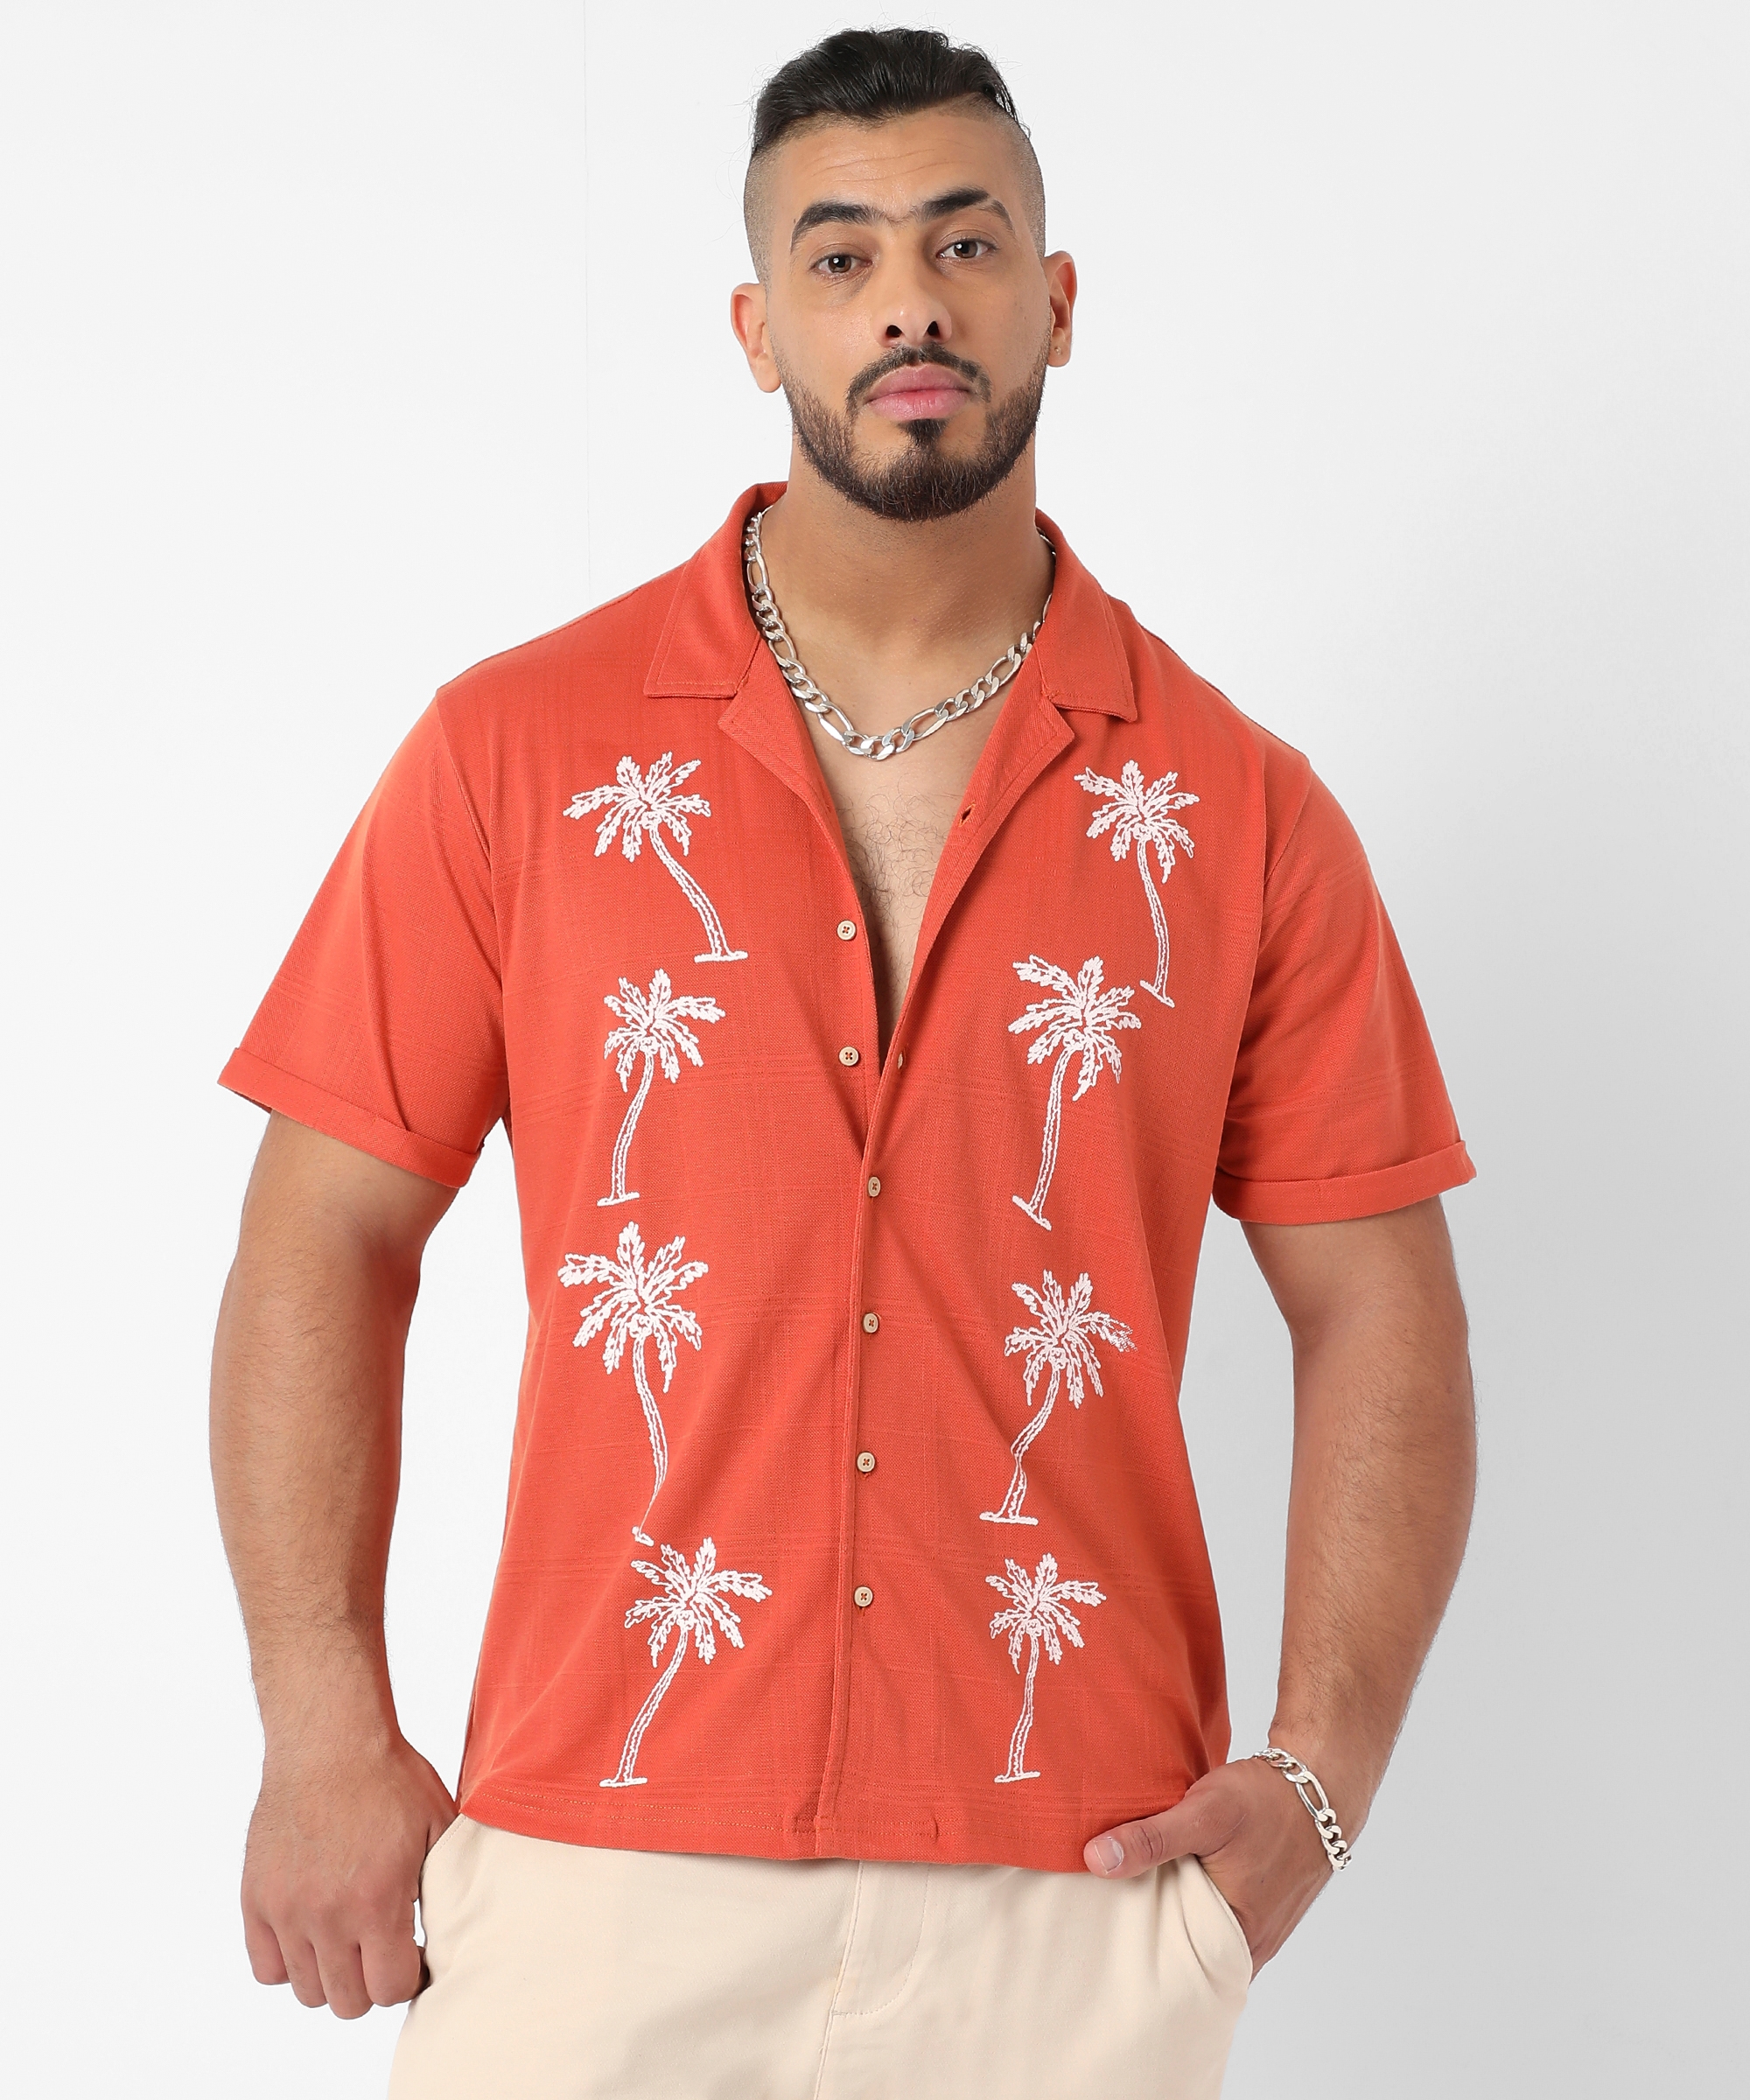 Men's Vermillion Orange Palm Tree Knit Shirt